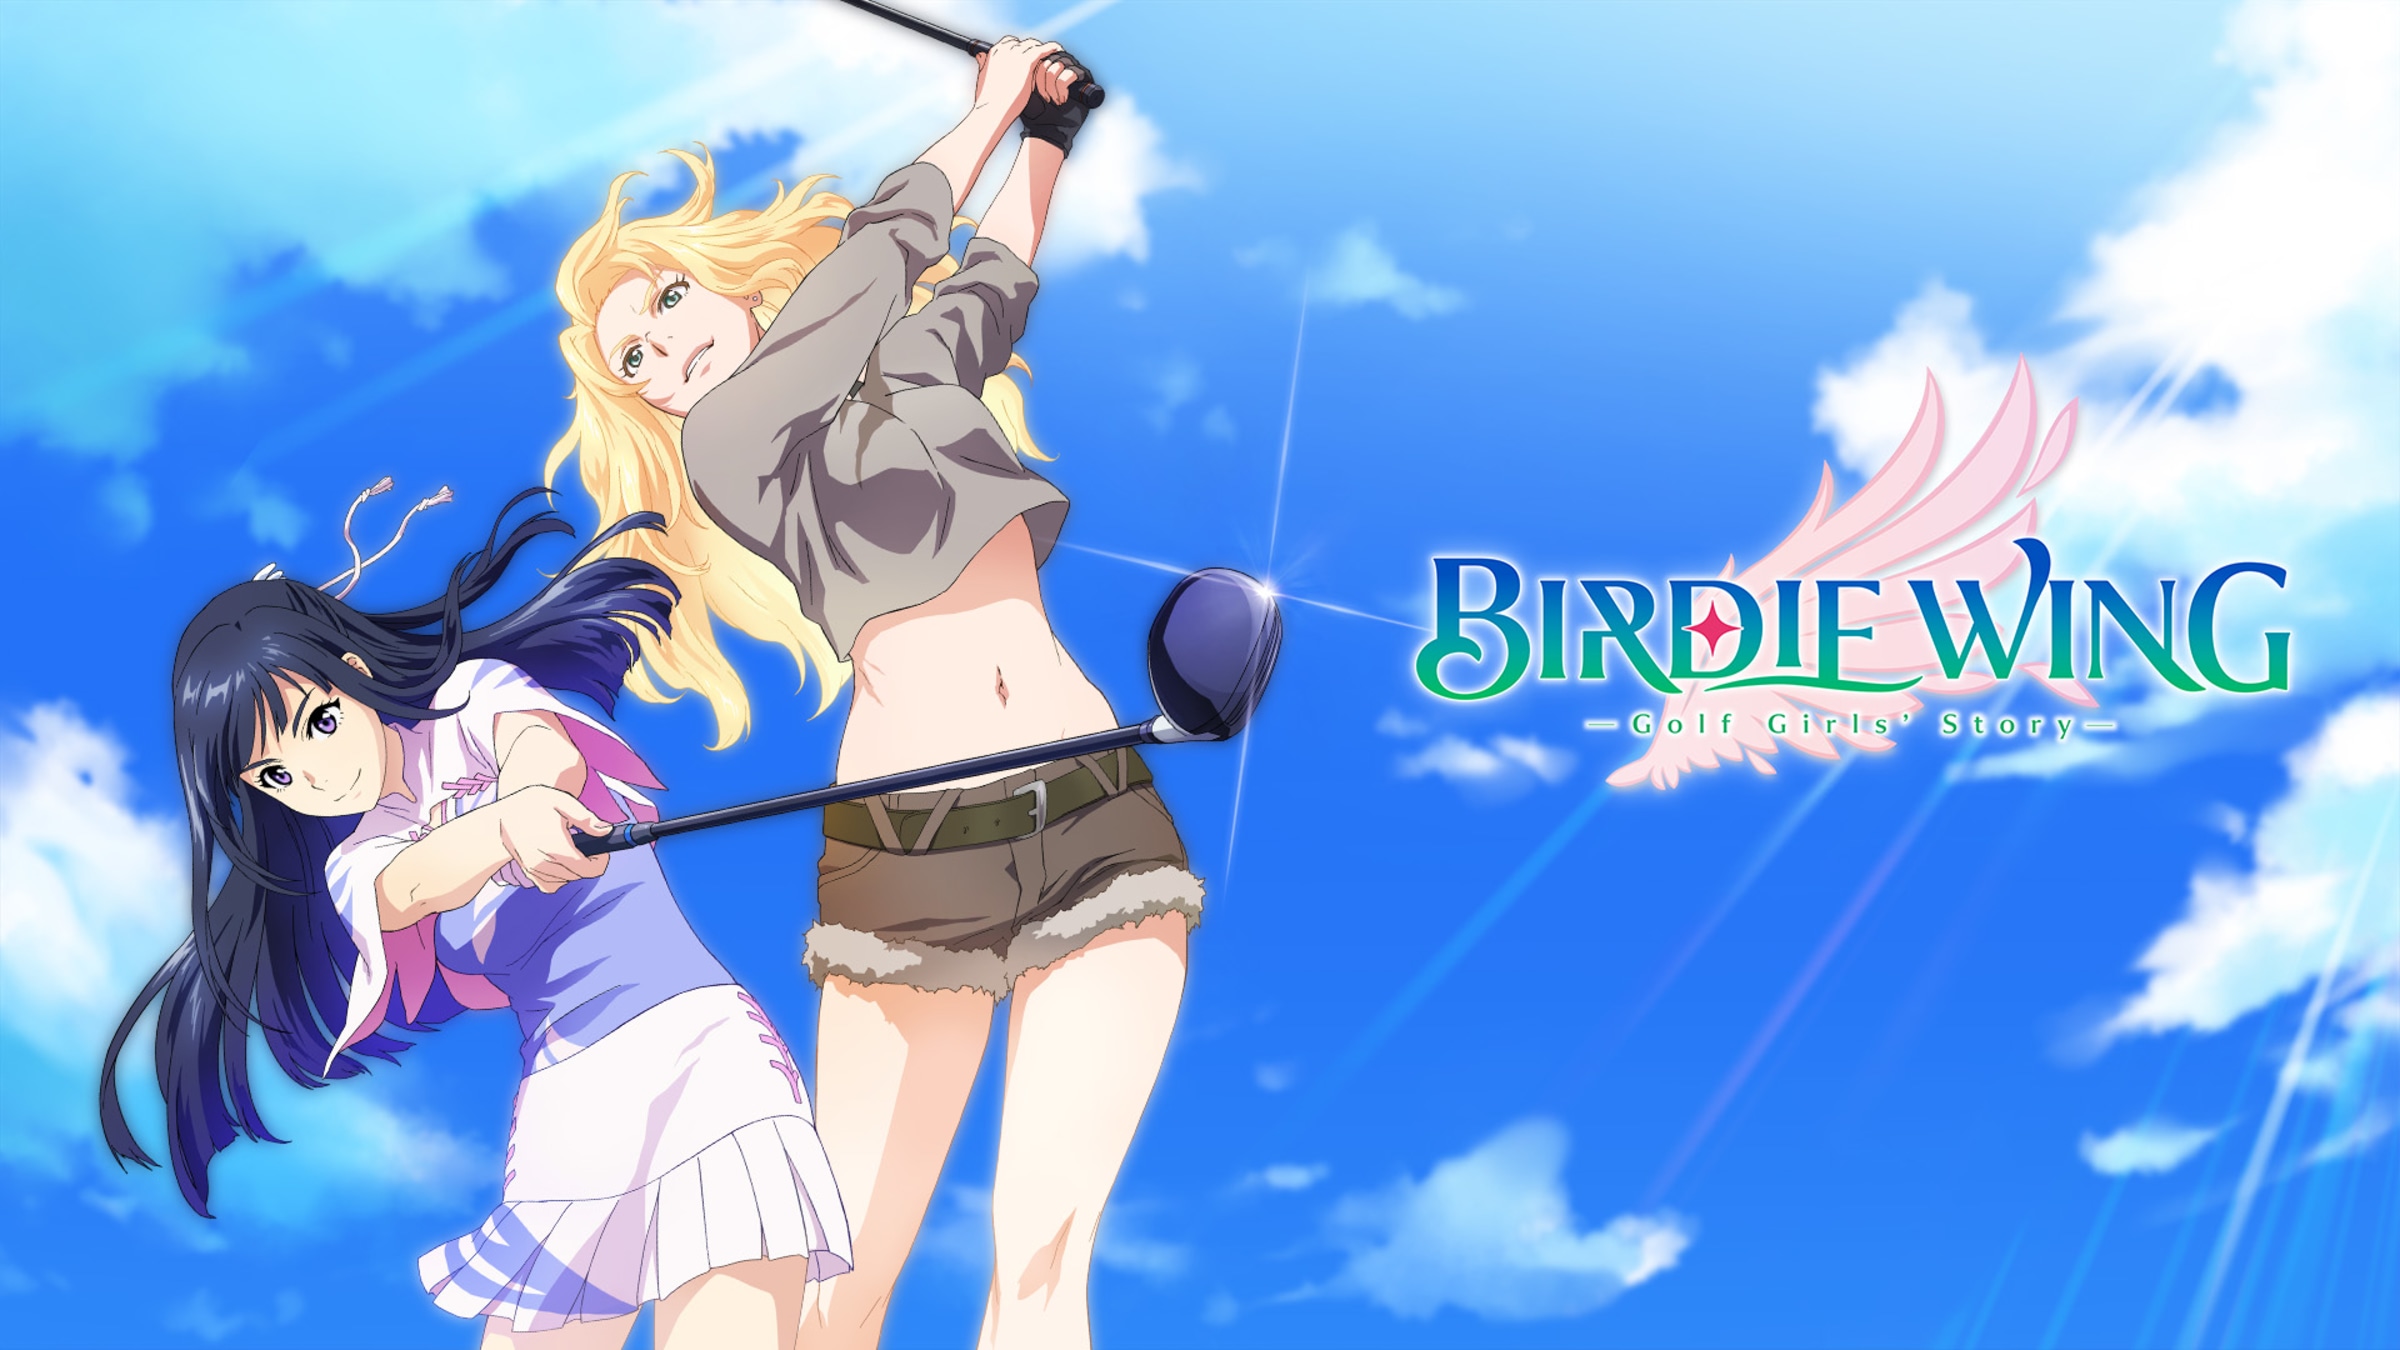 Assistir Birdie Wing Golf Girls Story 2 Online completo